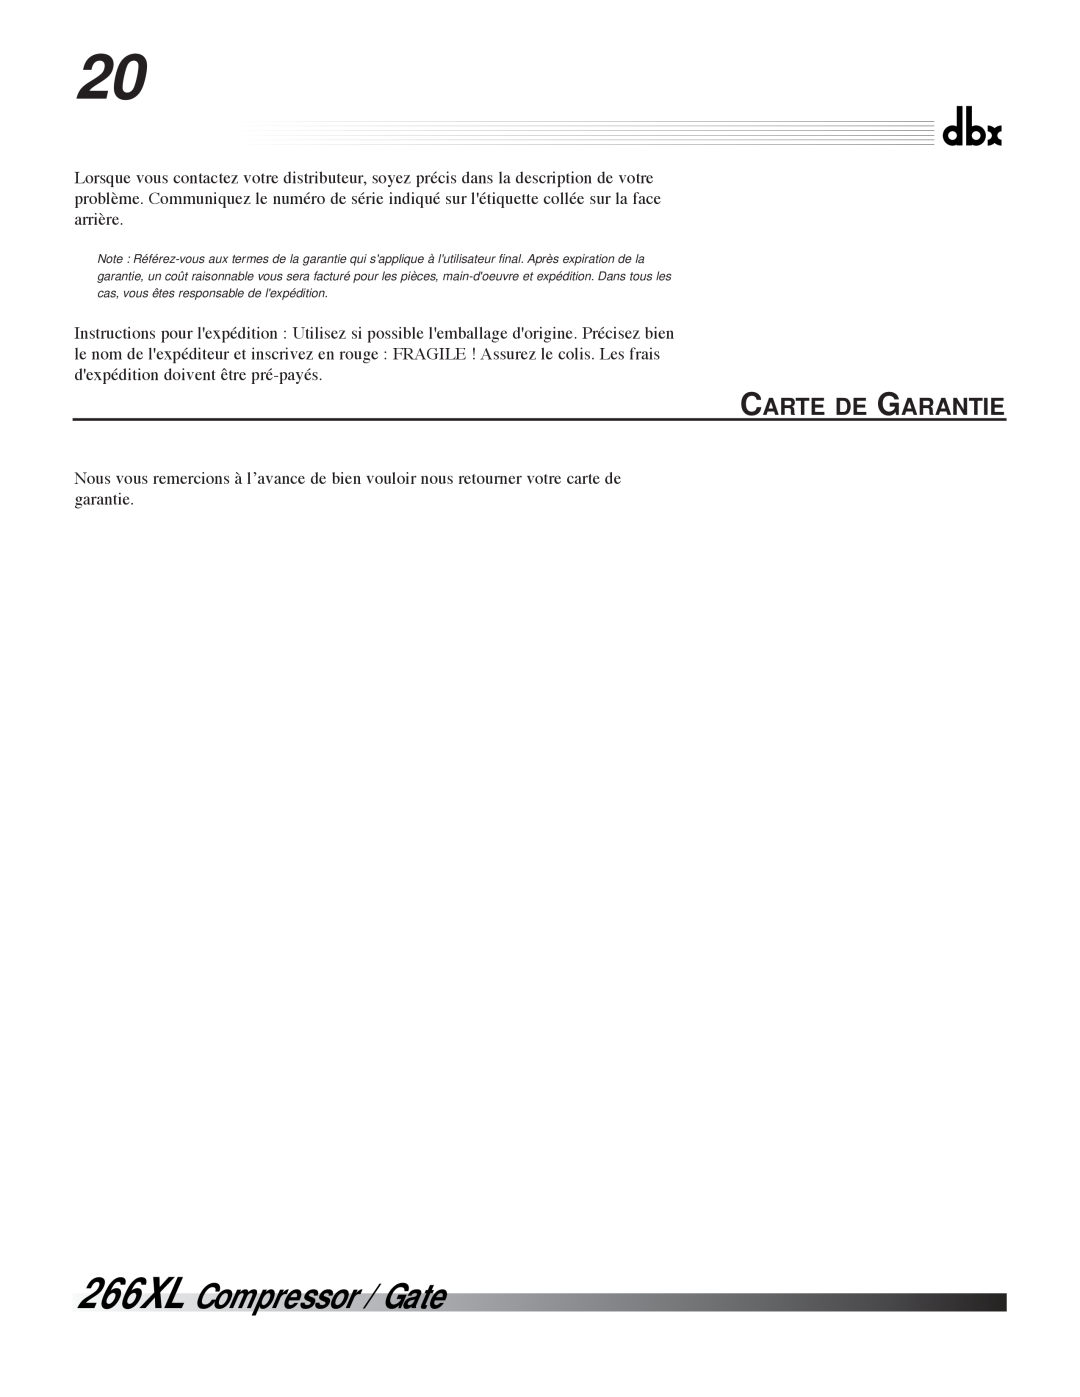 dbx Pro manuel dutilisation Carte De Garantie, 266XL Compressor / Gate 